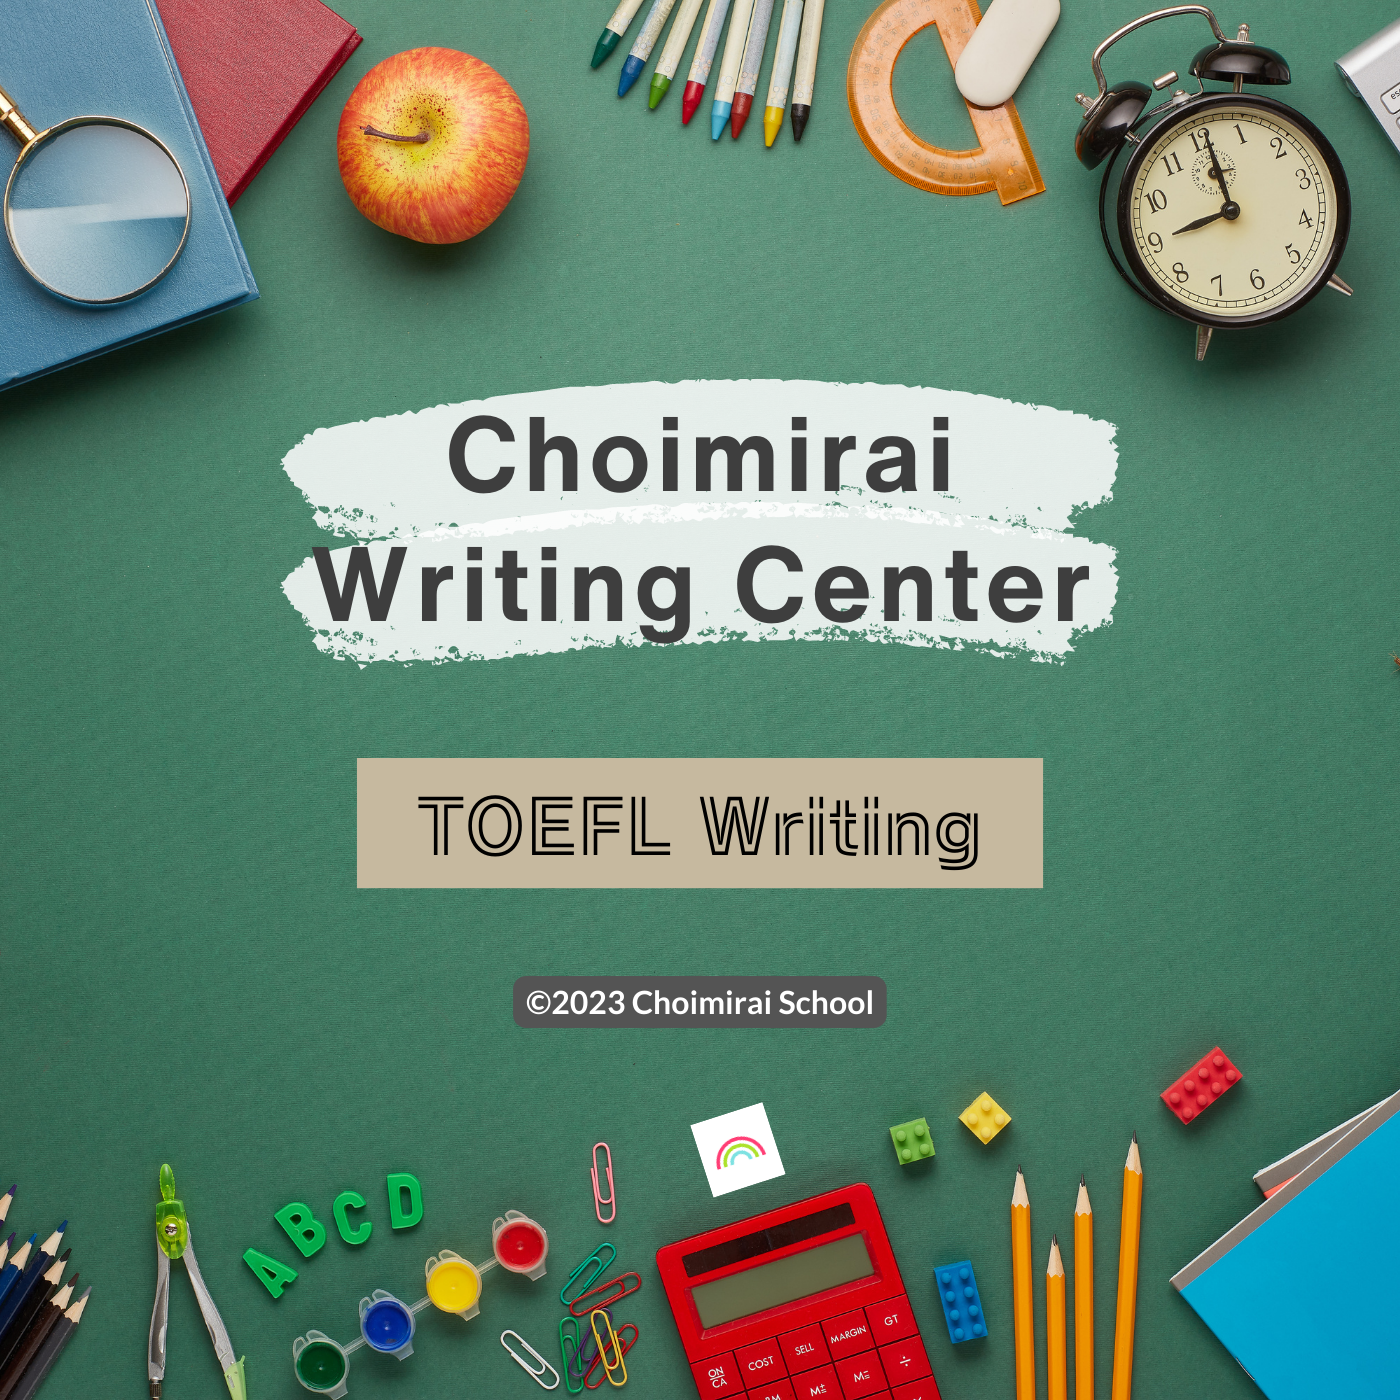 Choimirai Writing Center: TOEFL